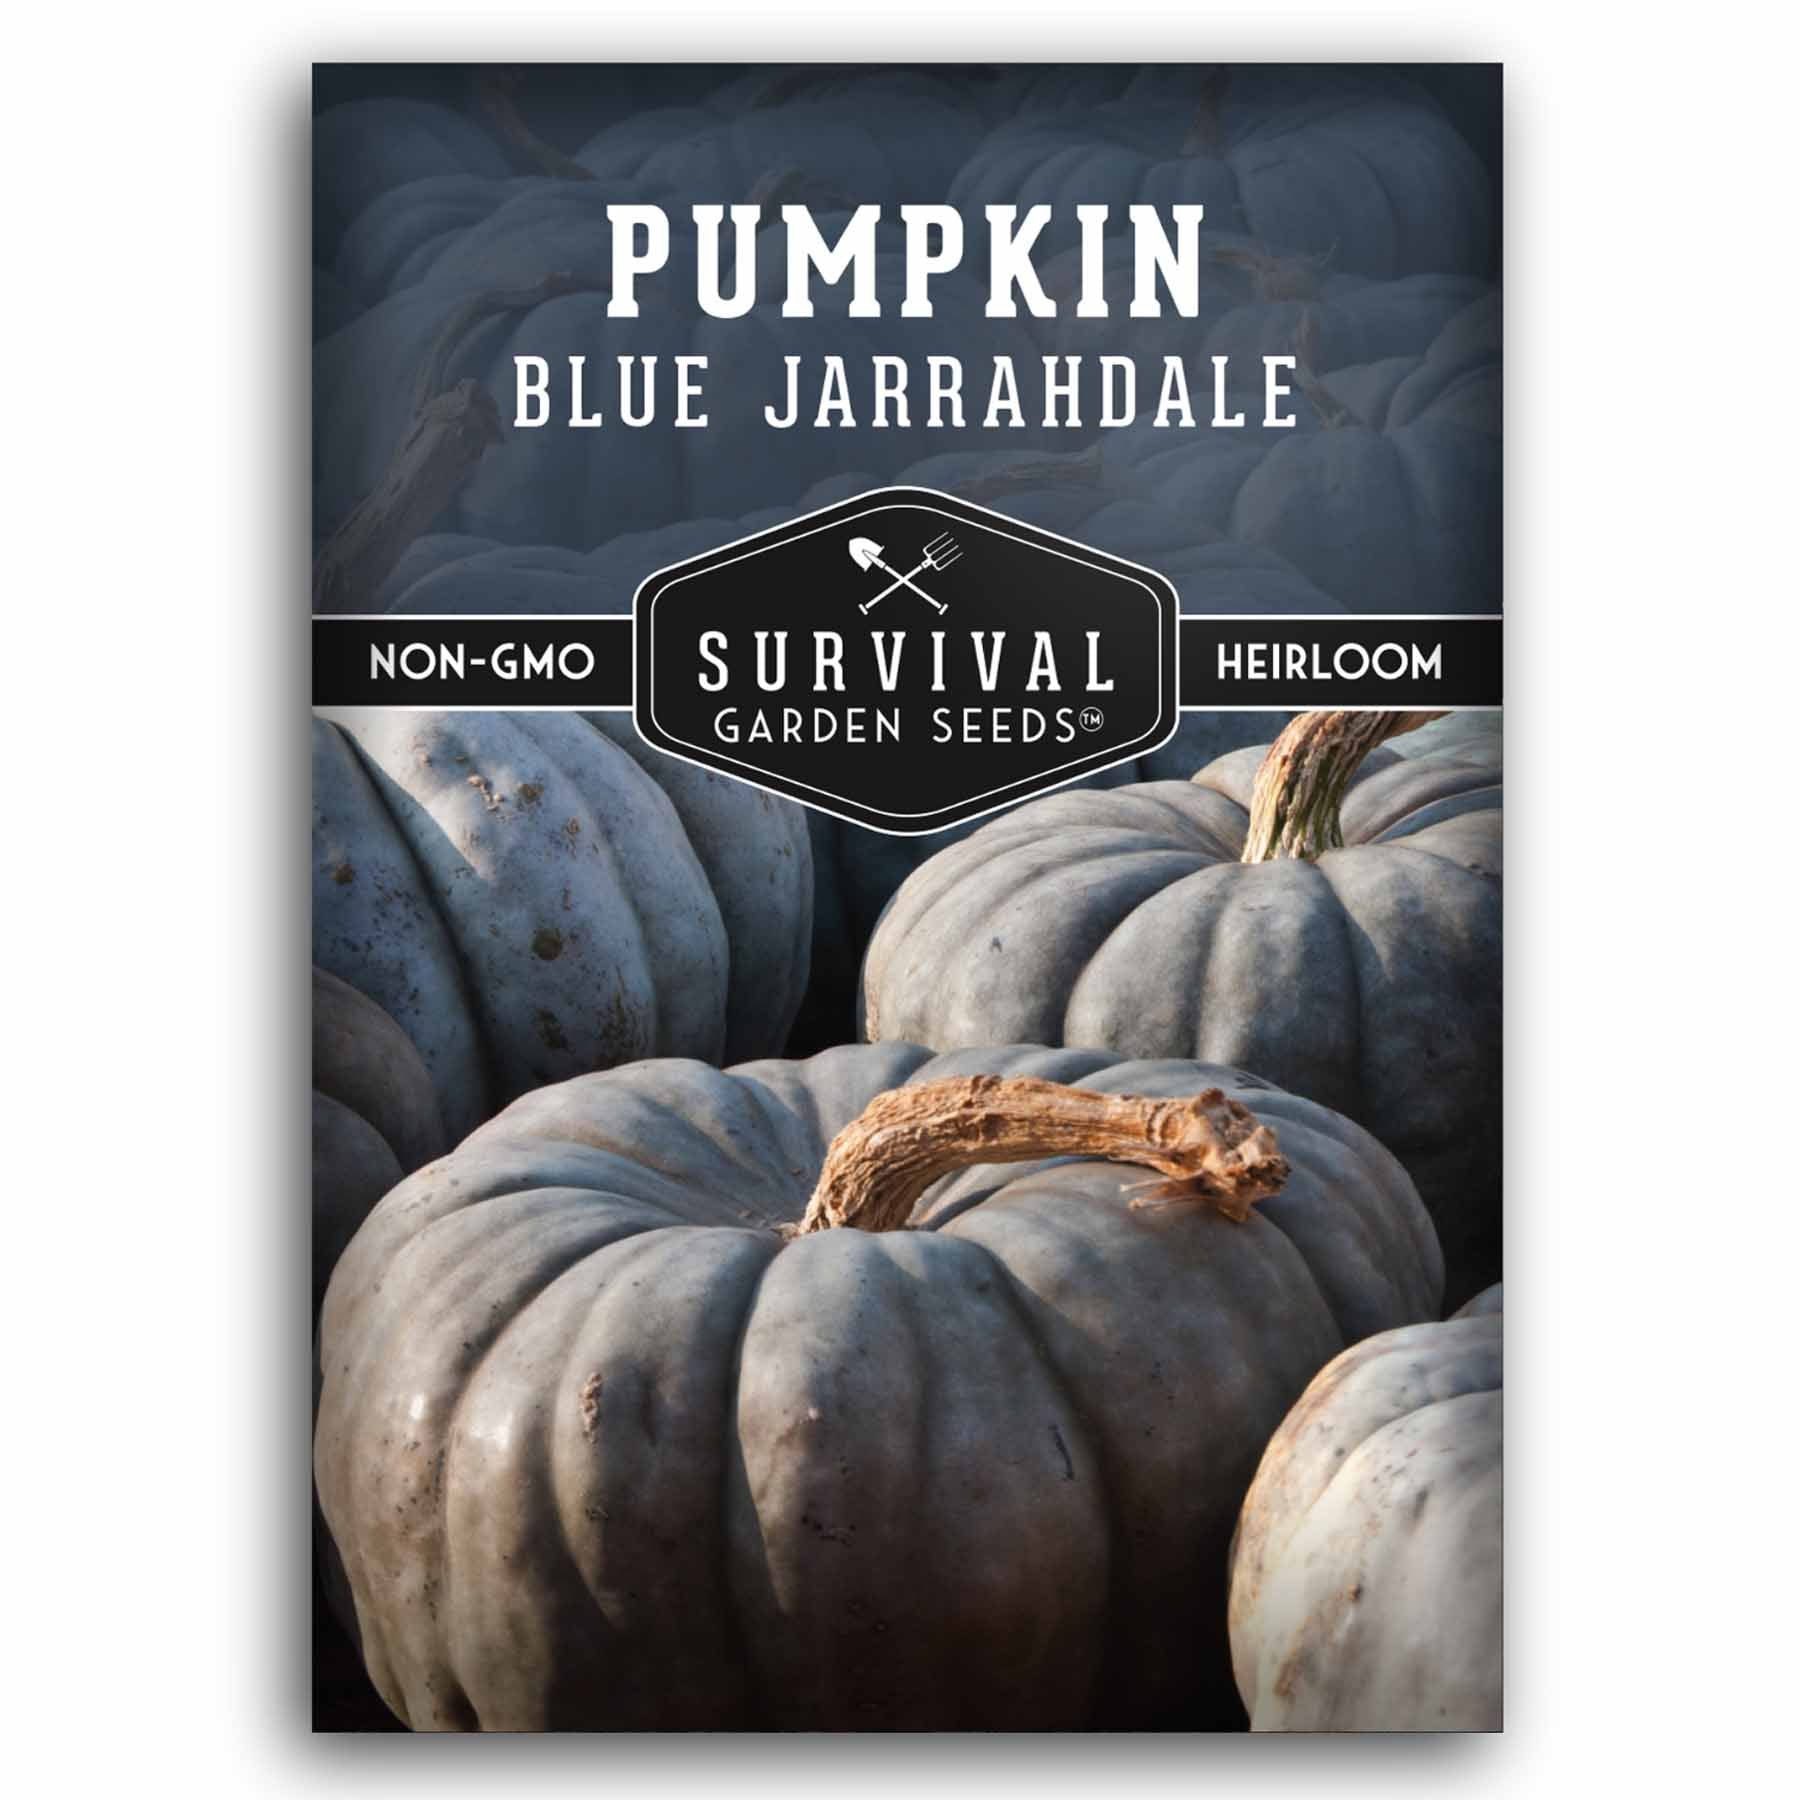 1 packet of Blue Jarrahdale Pumpkin seeds